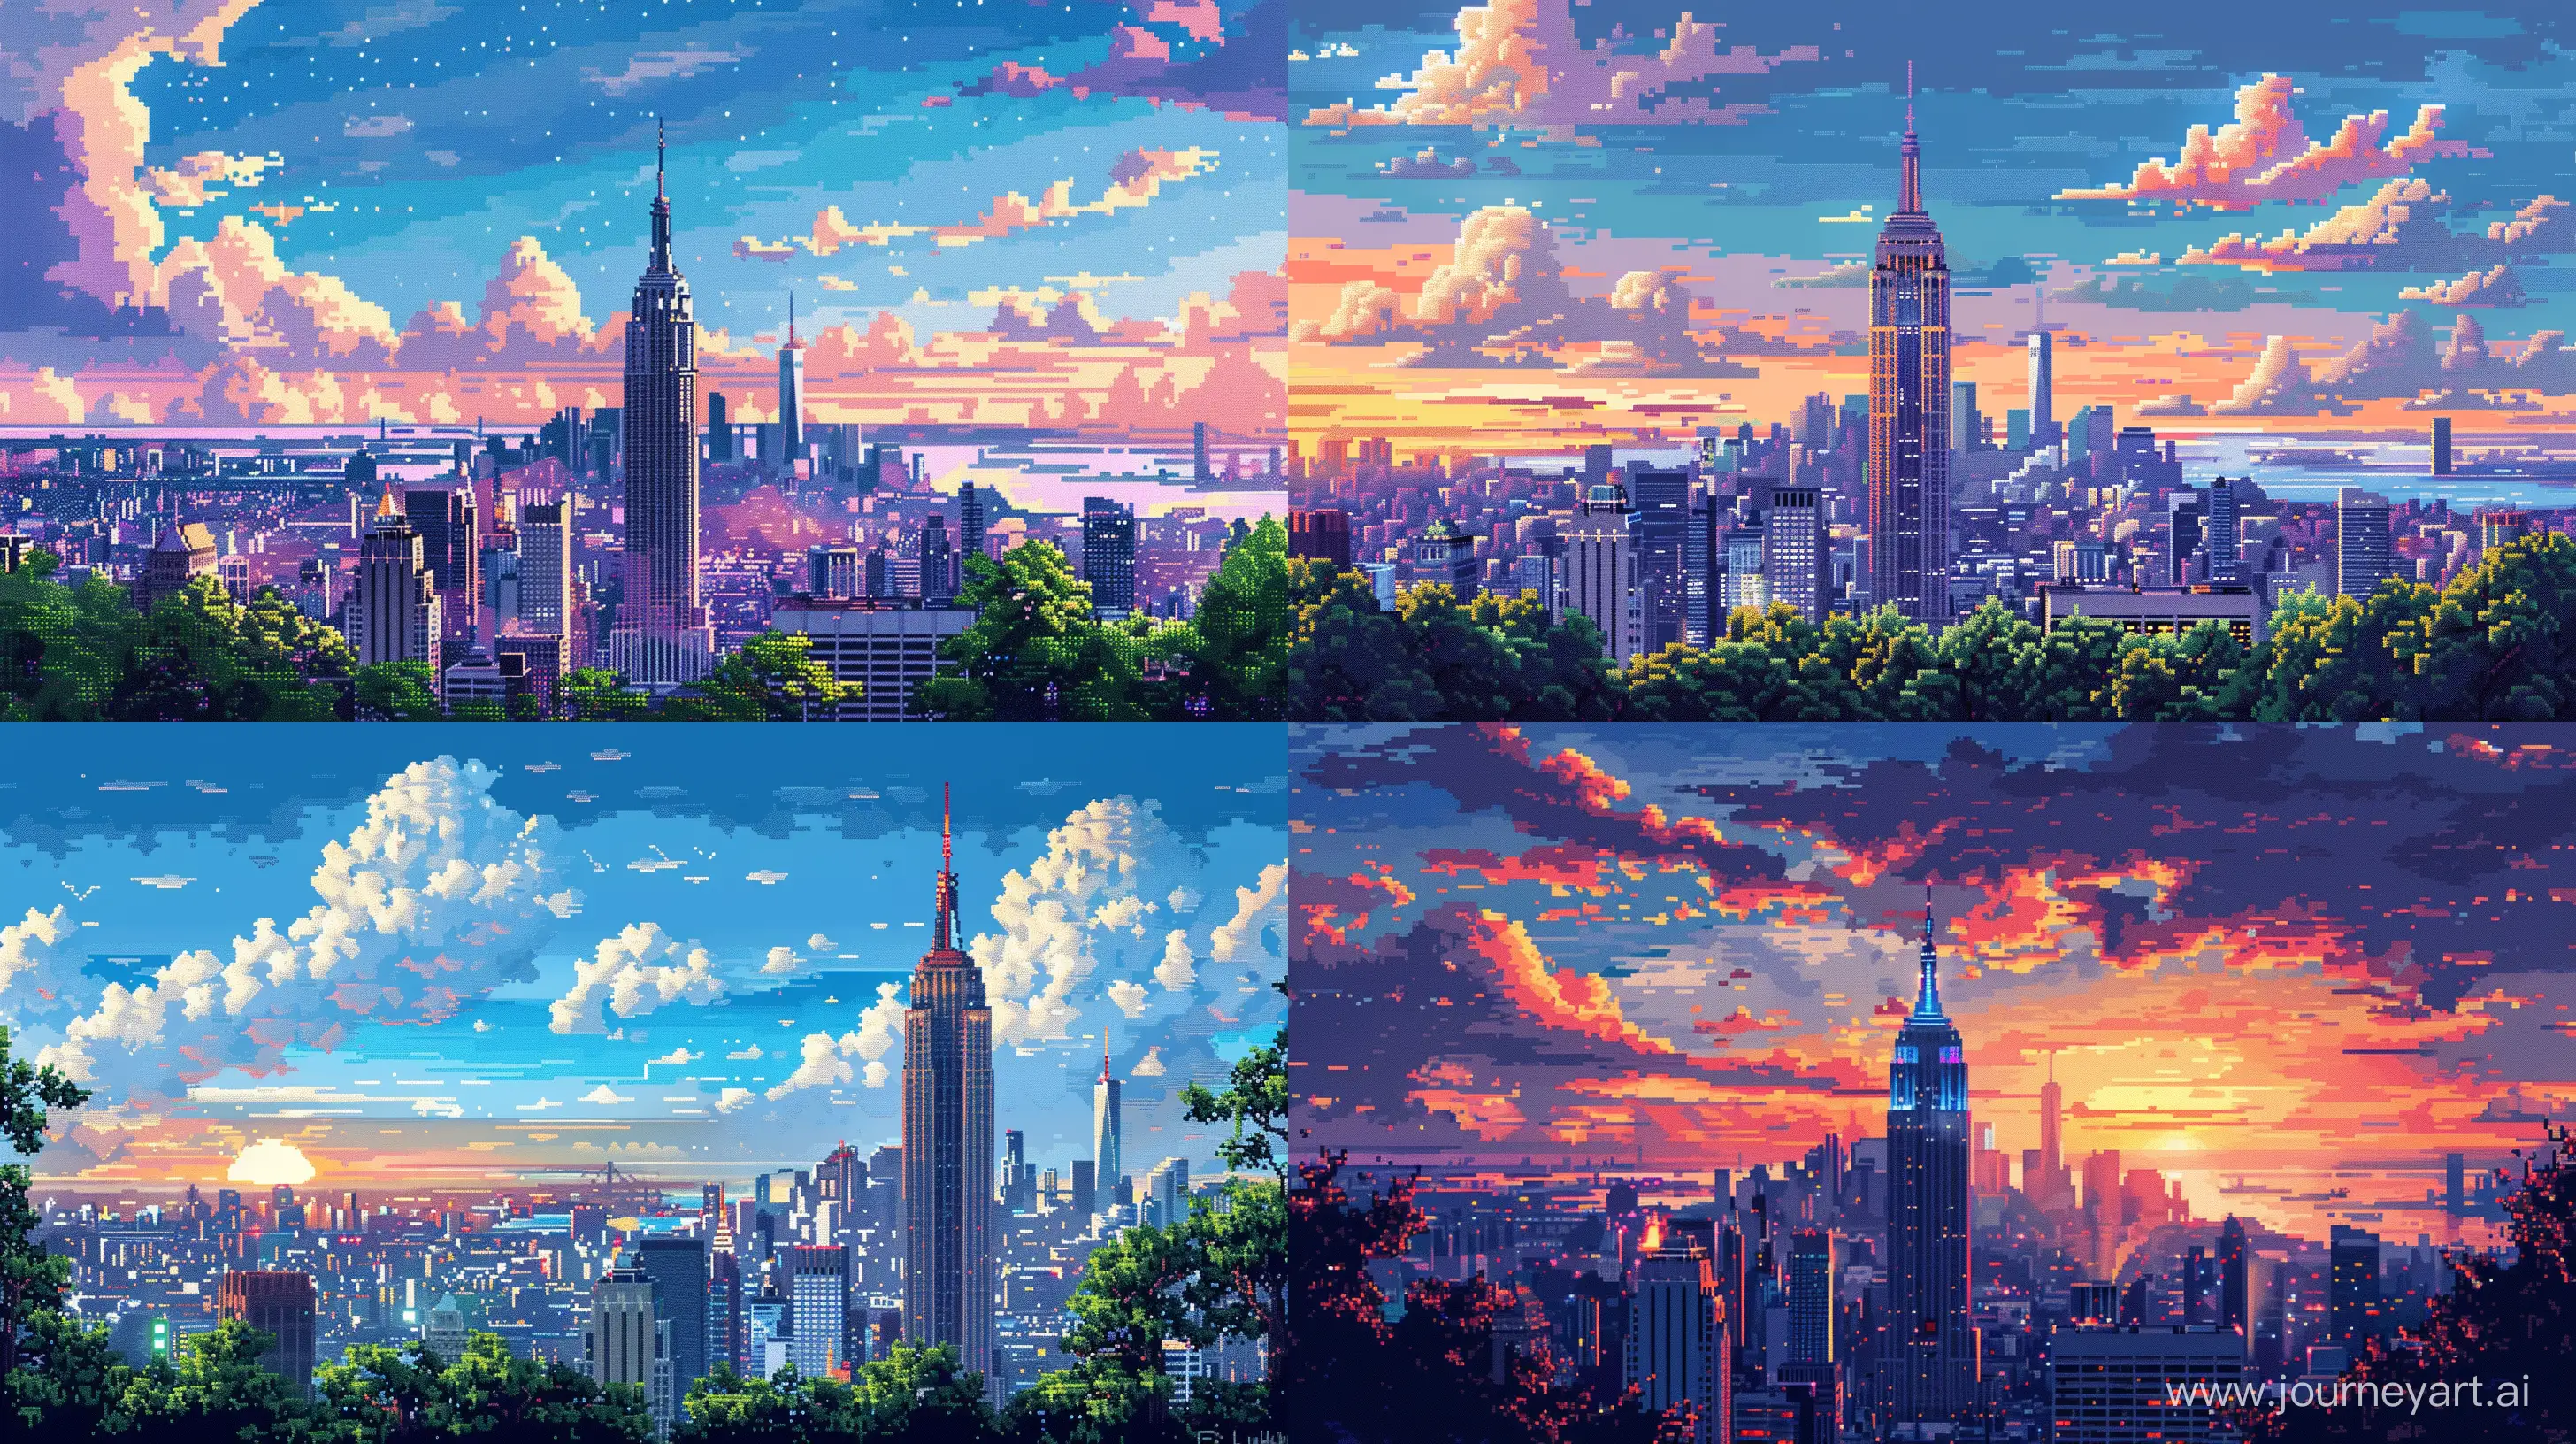 Empire-State-Building-8bit-Pixel-Art-Illustration-Vibrant-Daytime-Scene-with-Bold-Colors